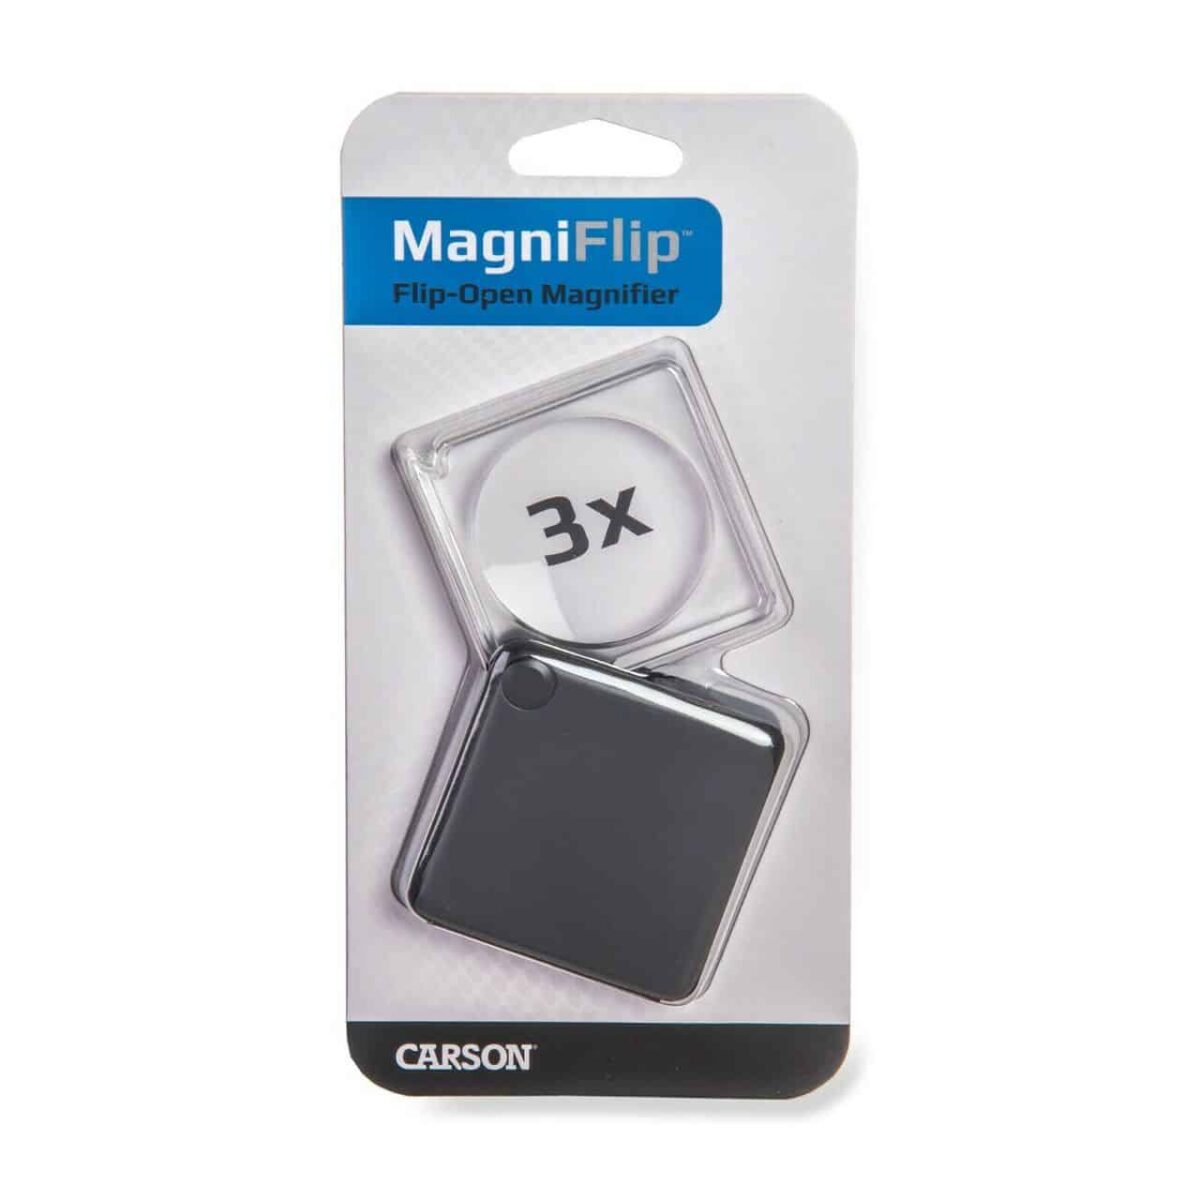 Carson GN 33 MagniFlip Magnifier 3x Lens Optical Power Built In Case Compact 193950878256 5 - Maddisons UK